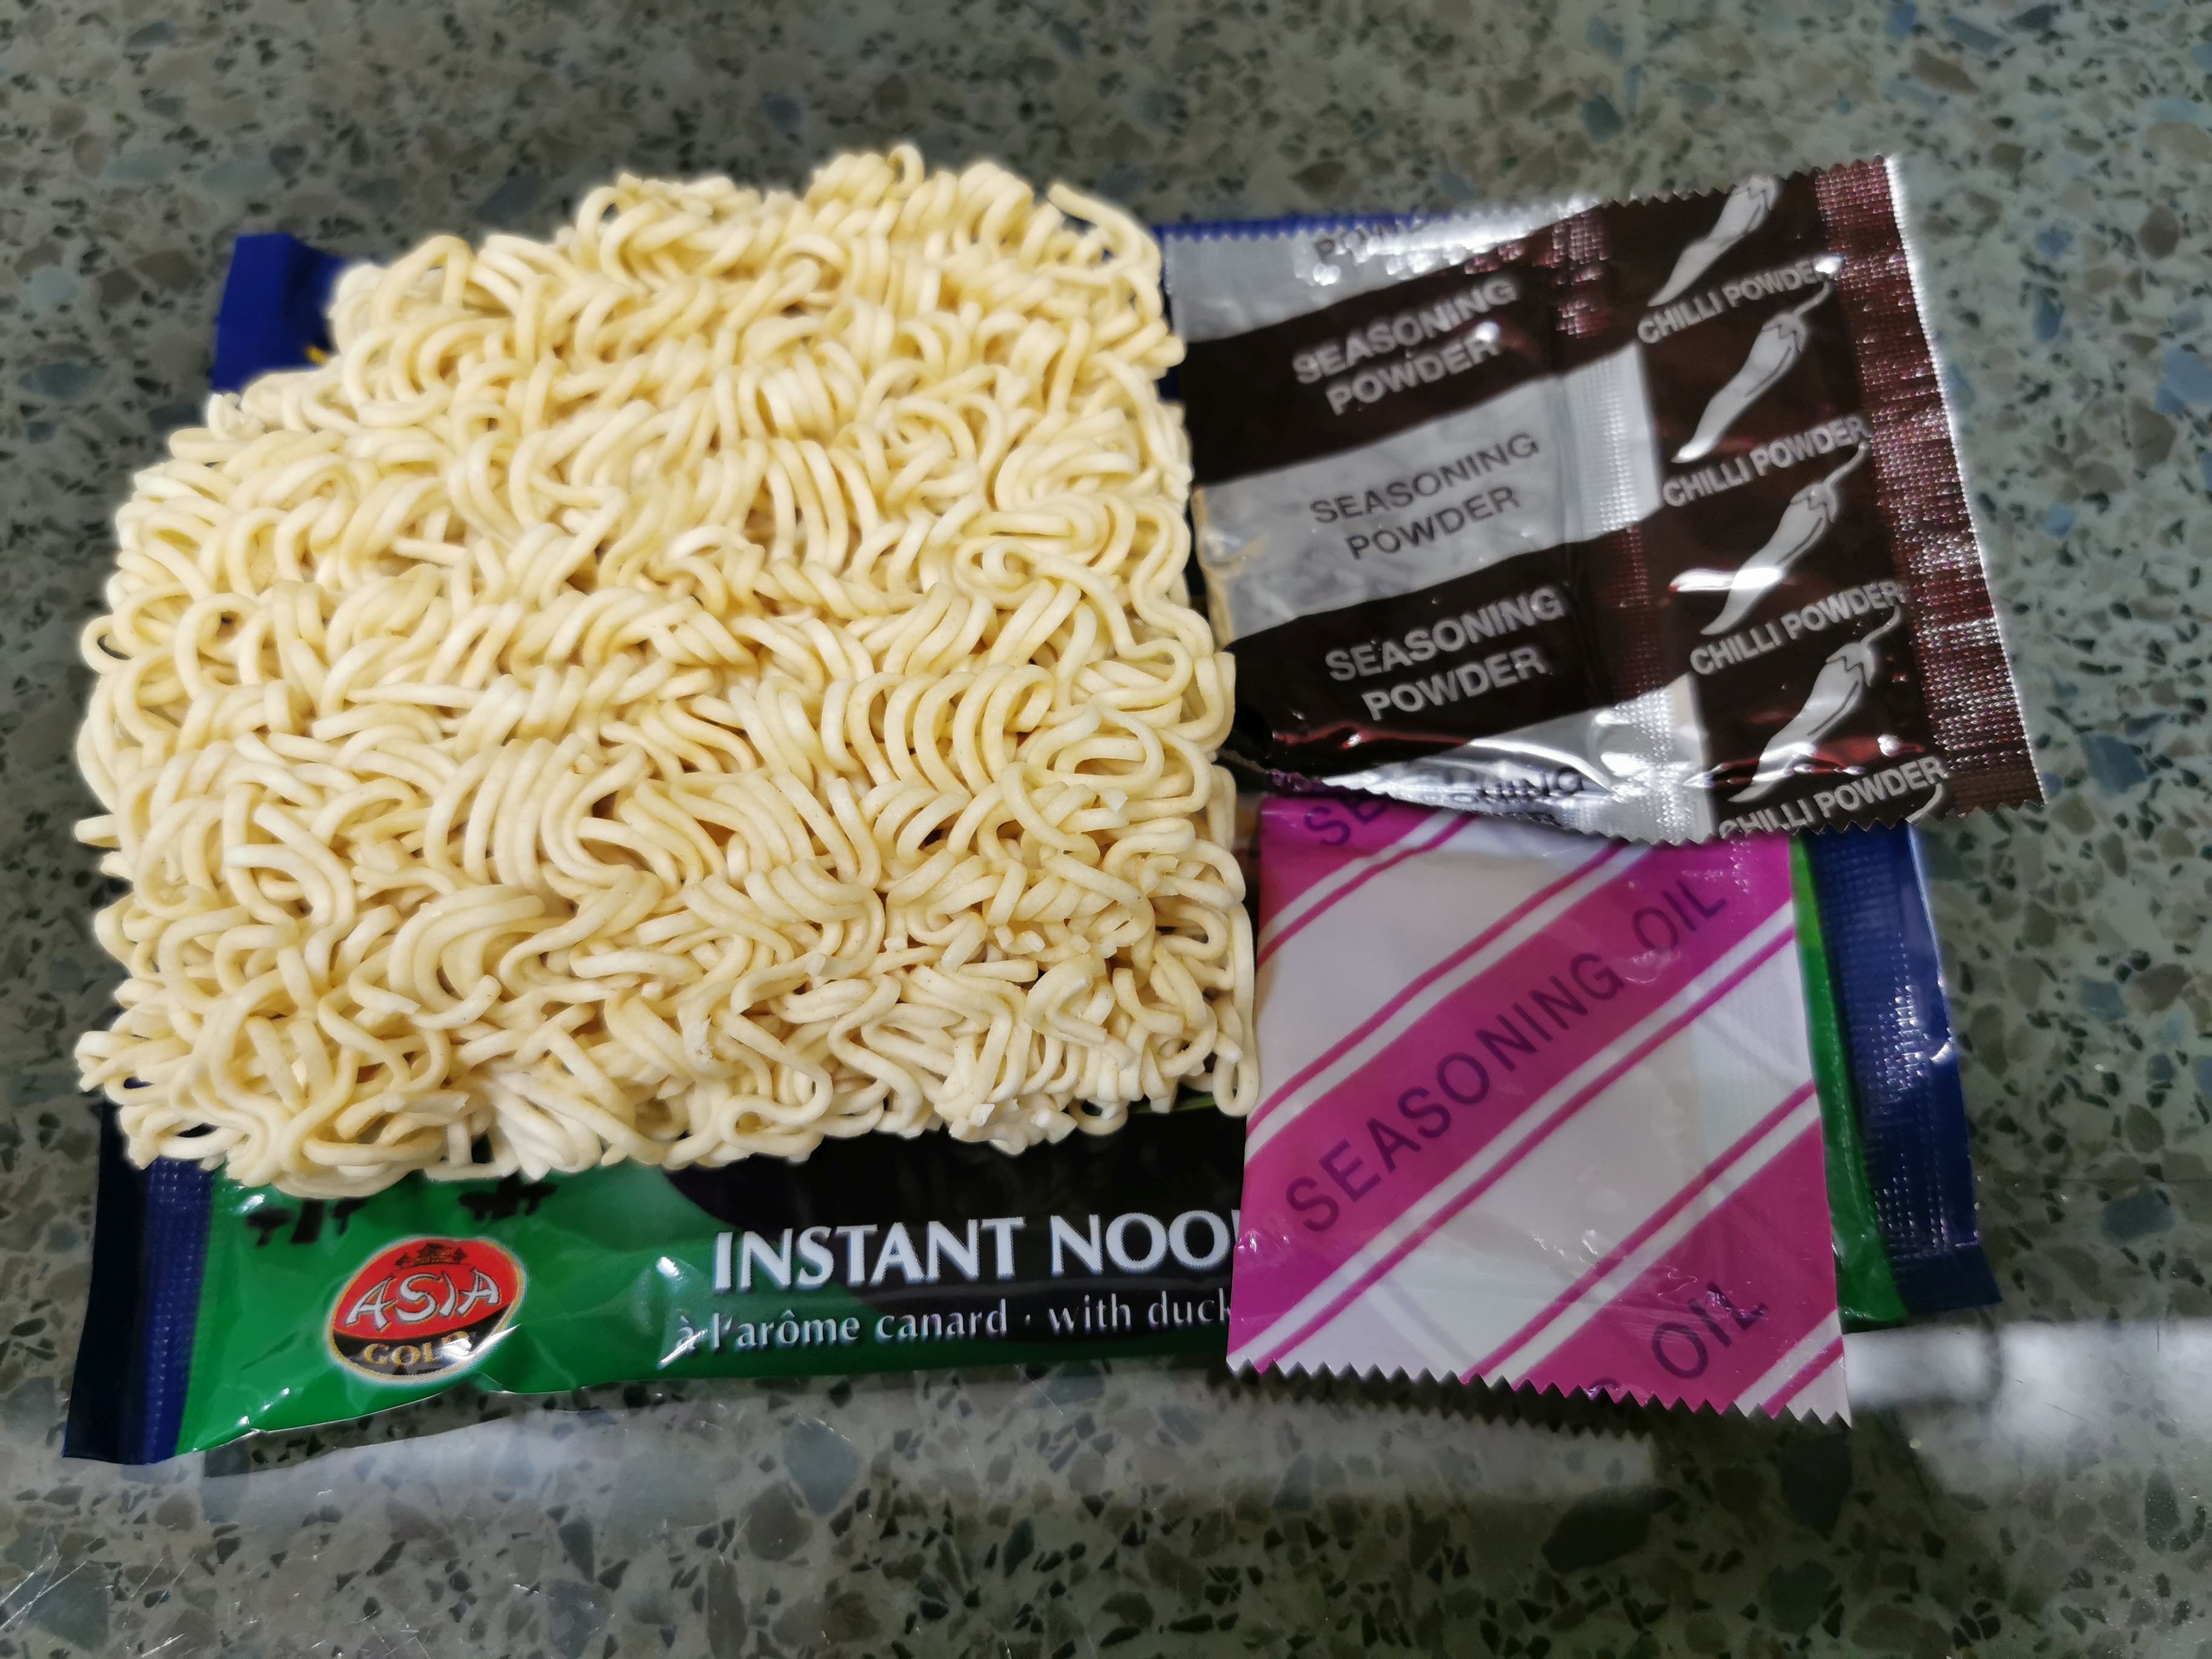 #2417: Asia Gold "Instant Noodles Enten-Geschmack"